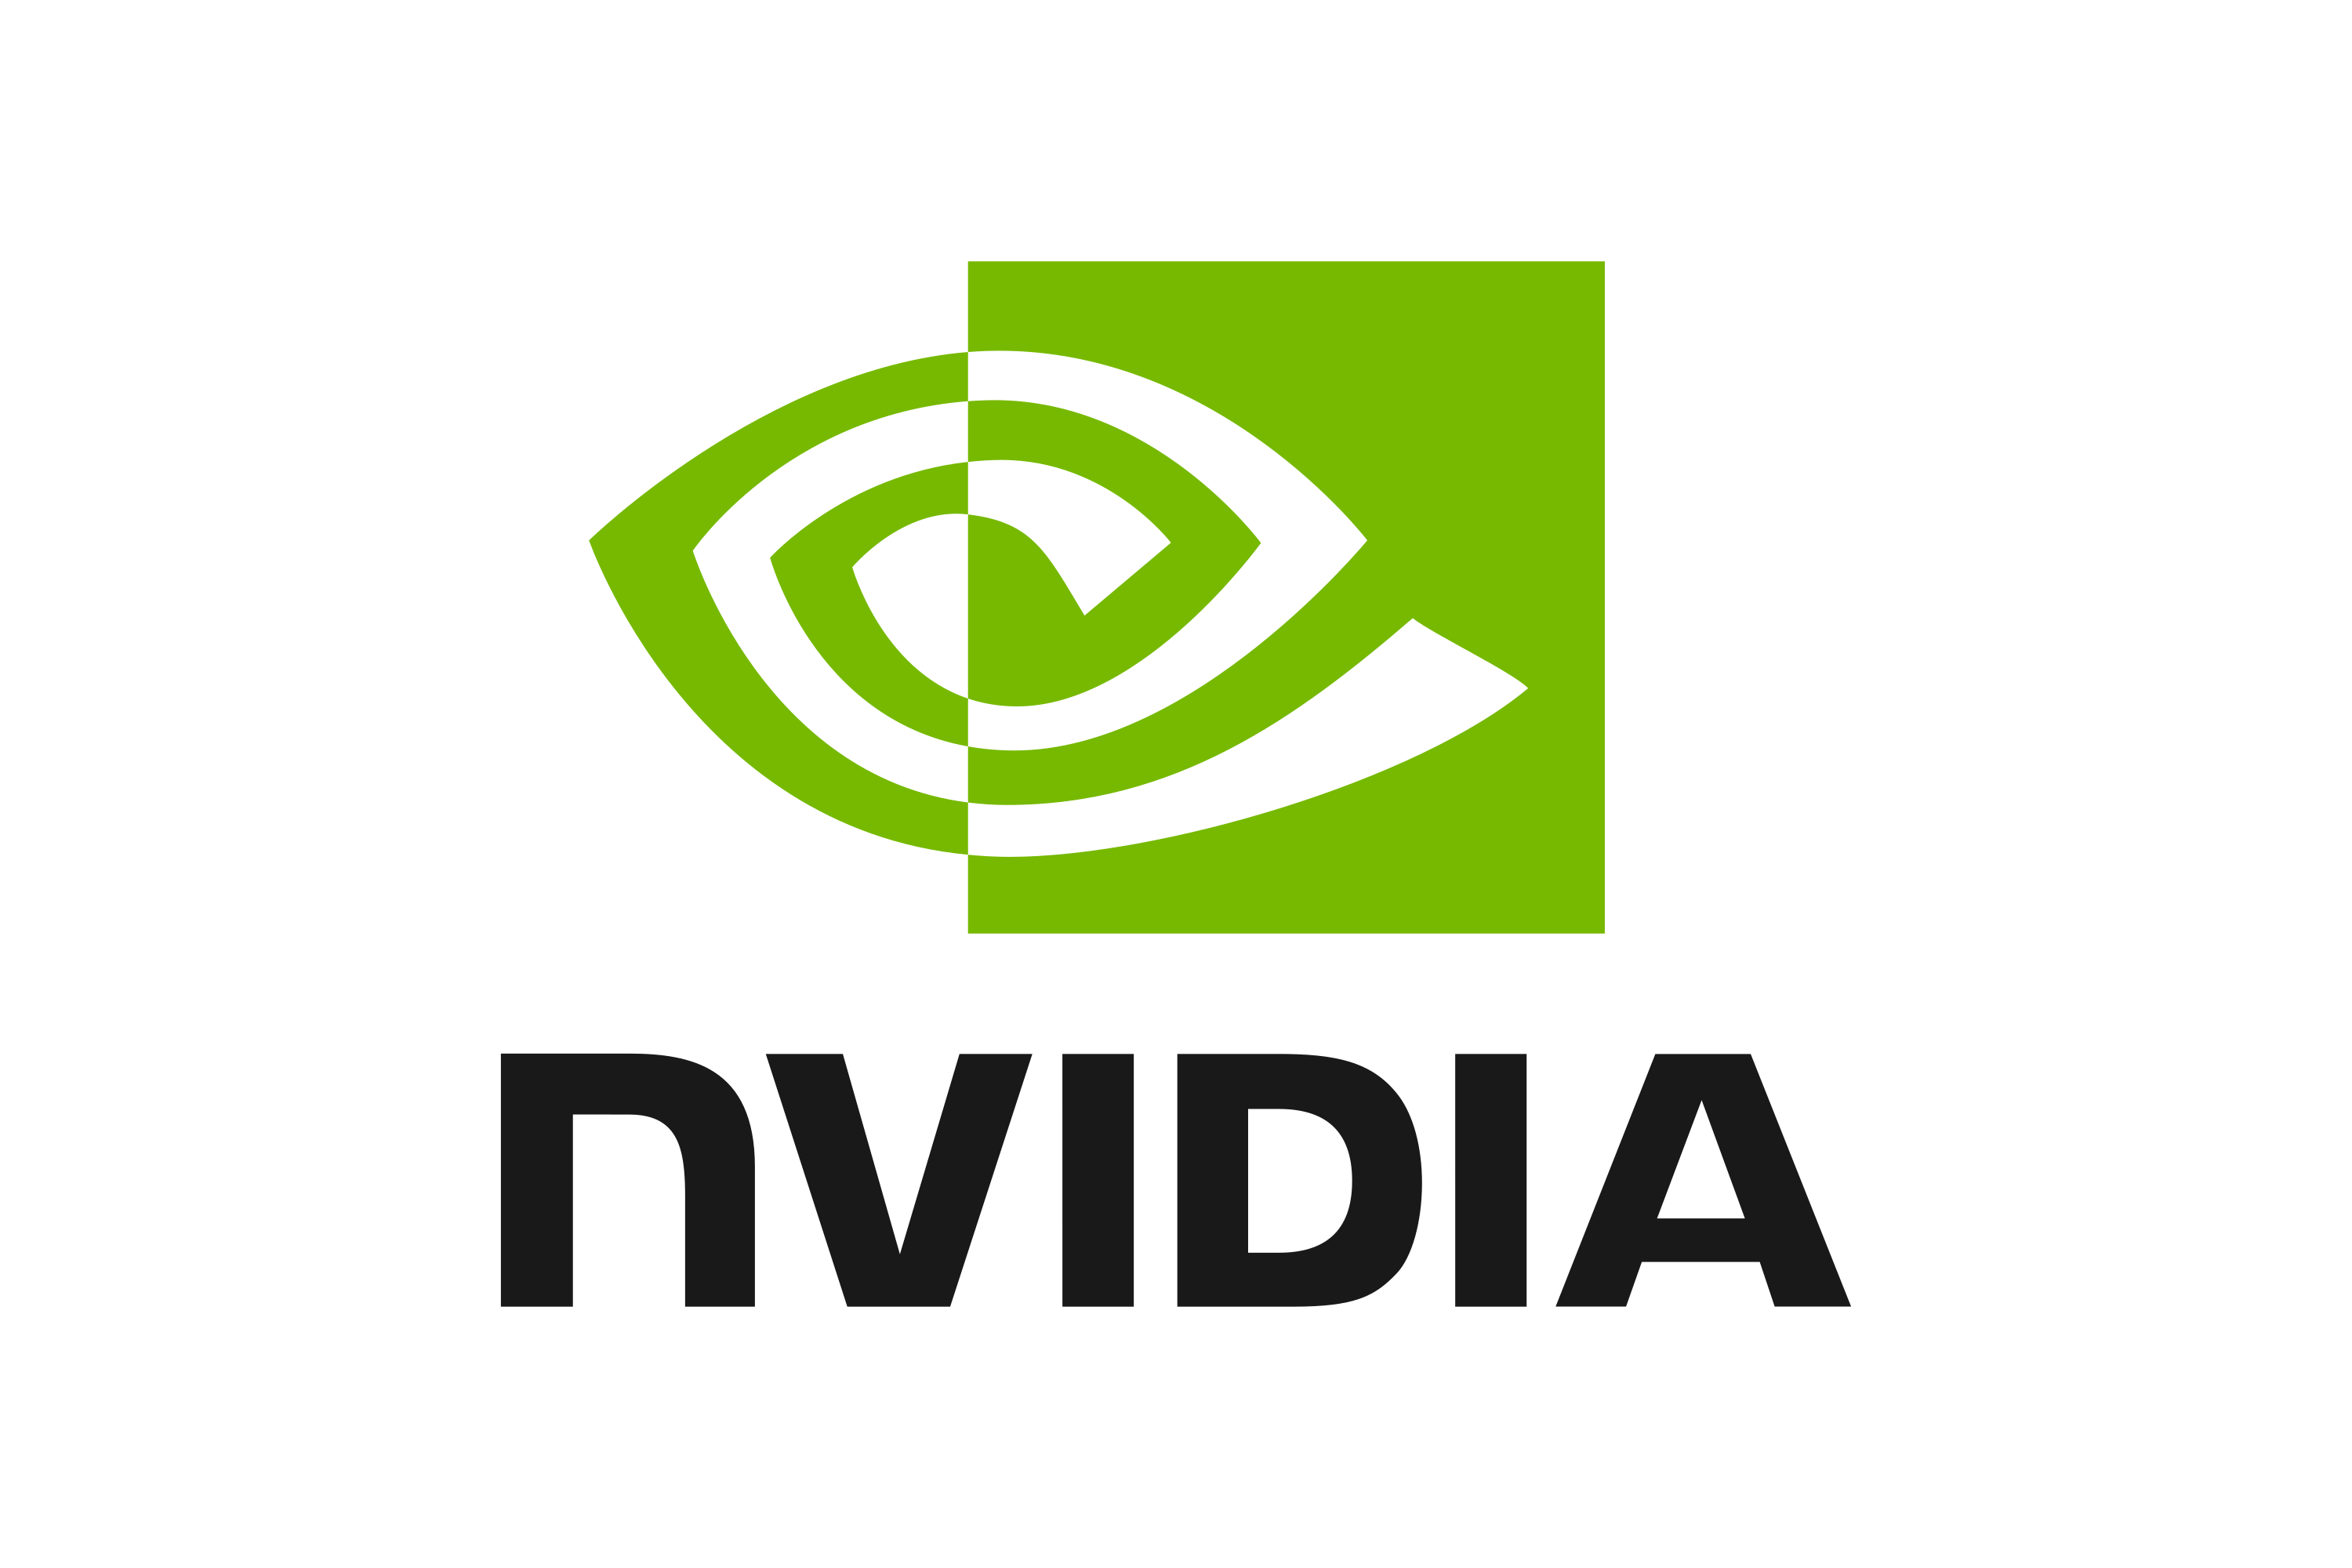 Nvidia Logo Download PNG Image